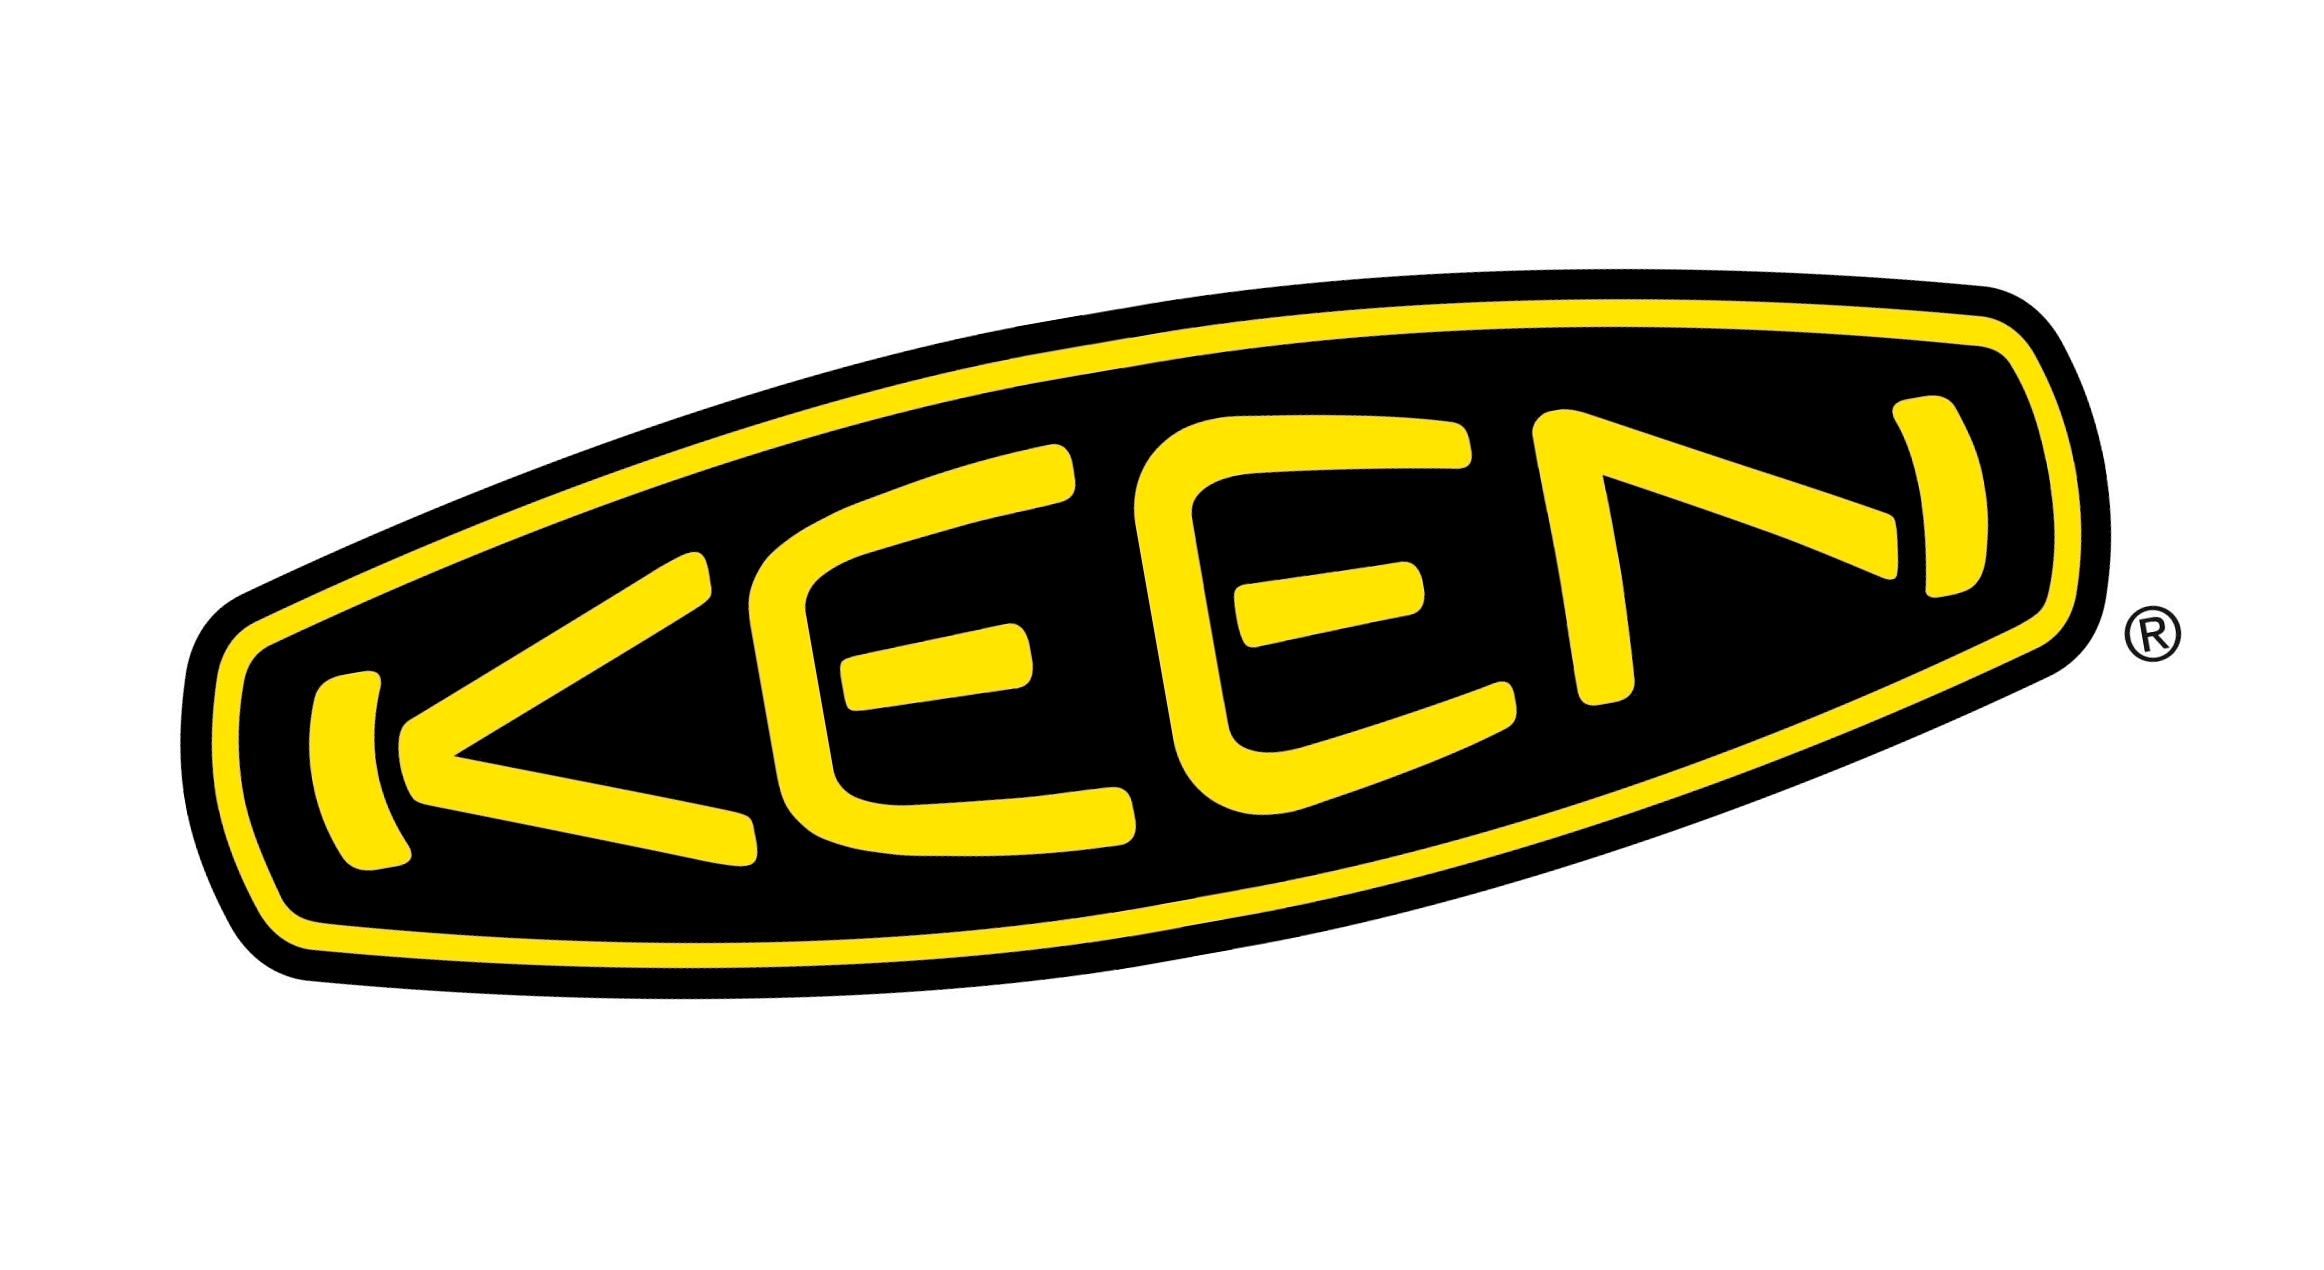 Keen logo, emblem, rotated